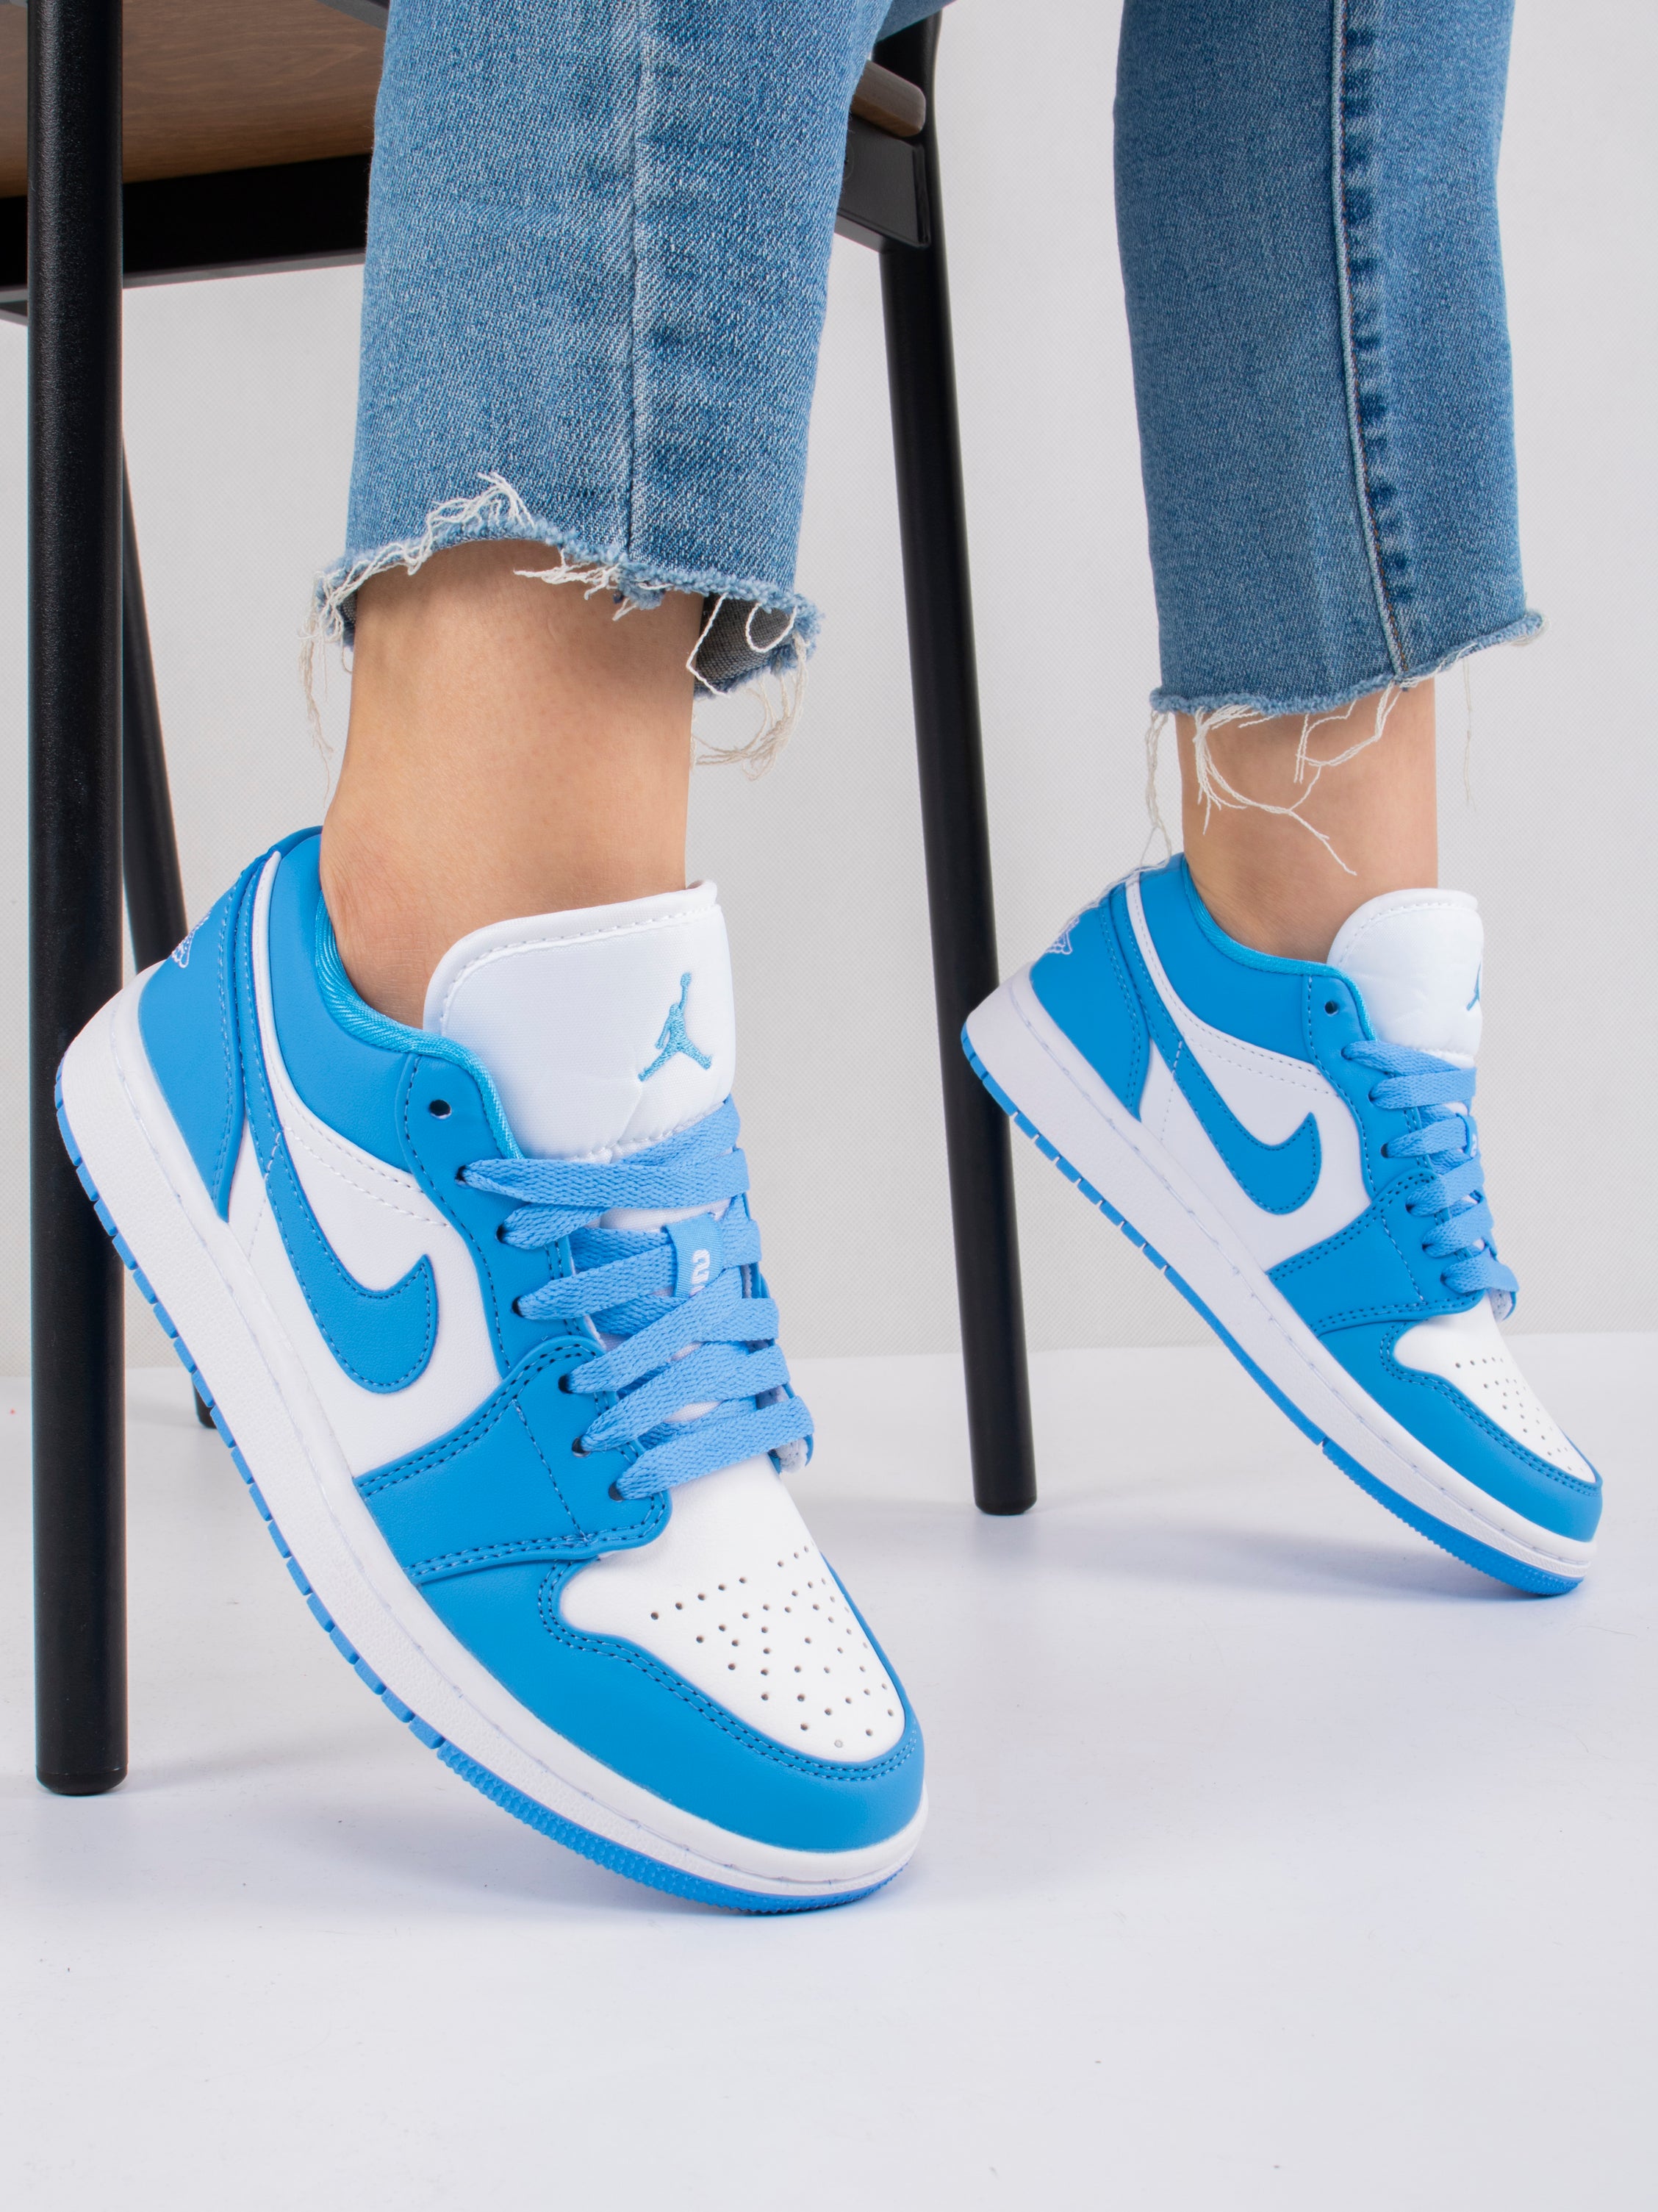 Nike Air Jordan 1 Low trainers in blue & white